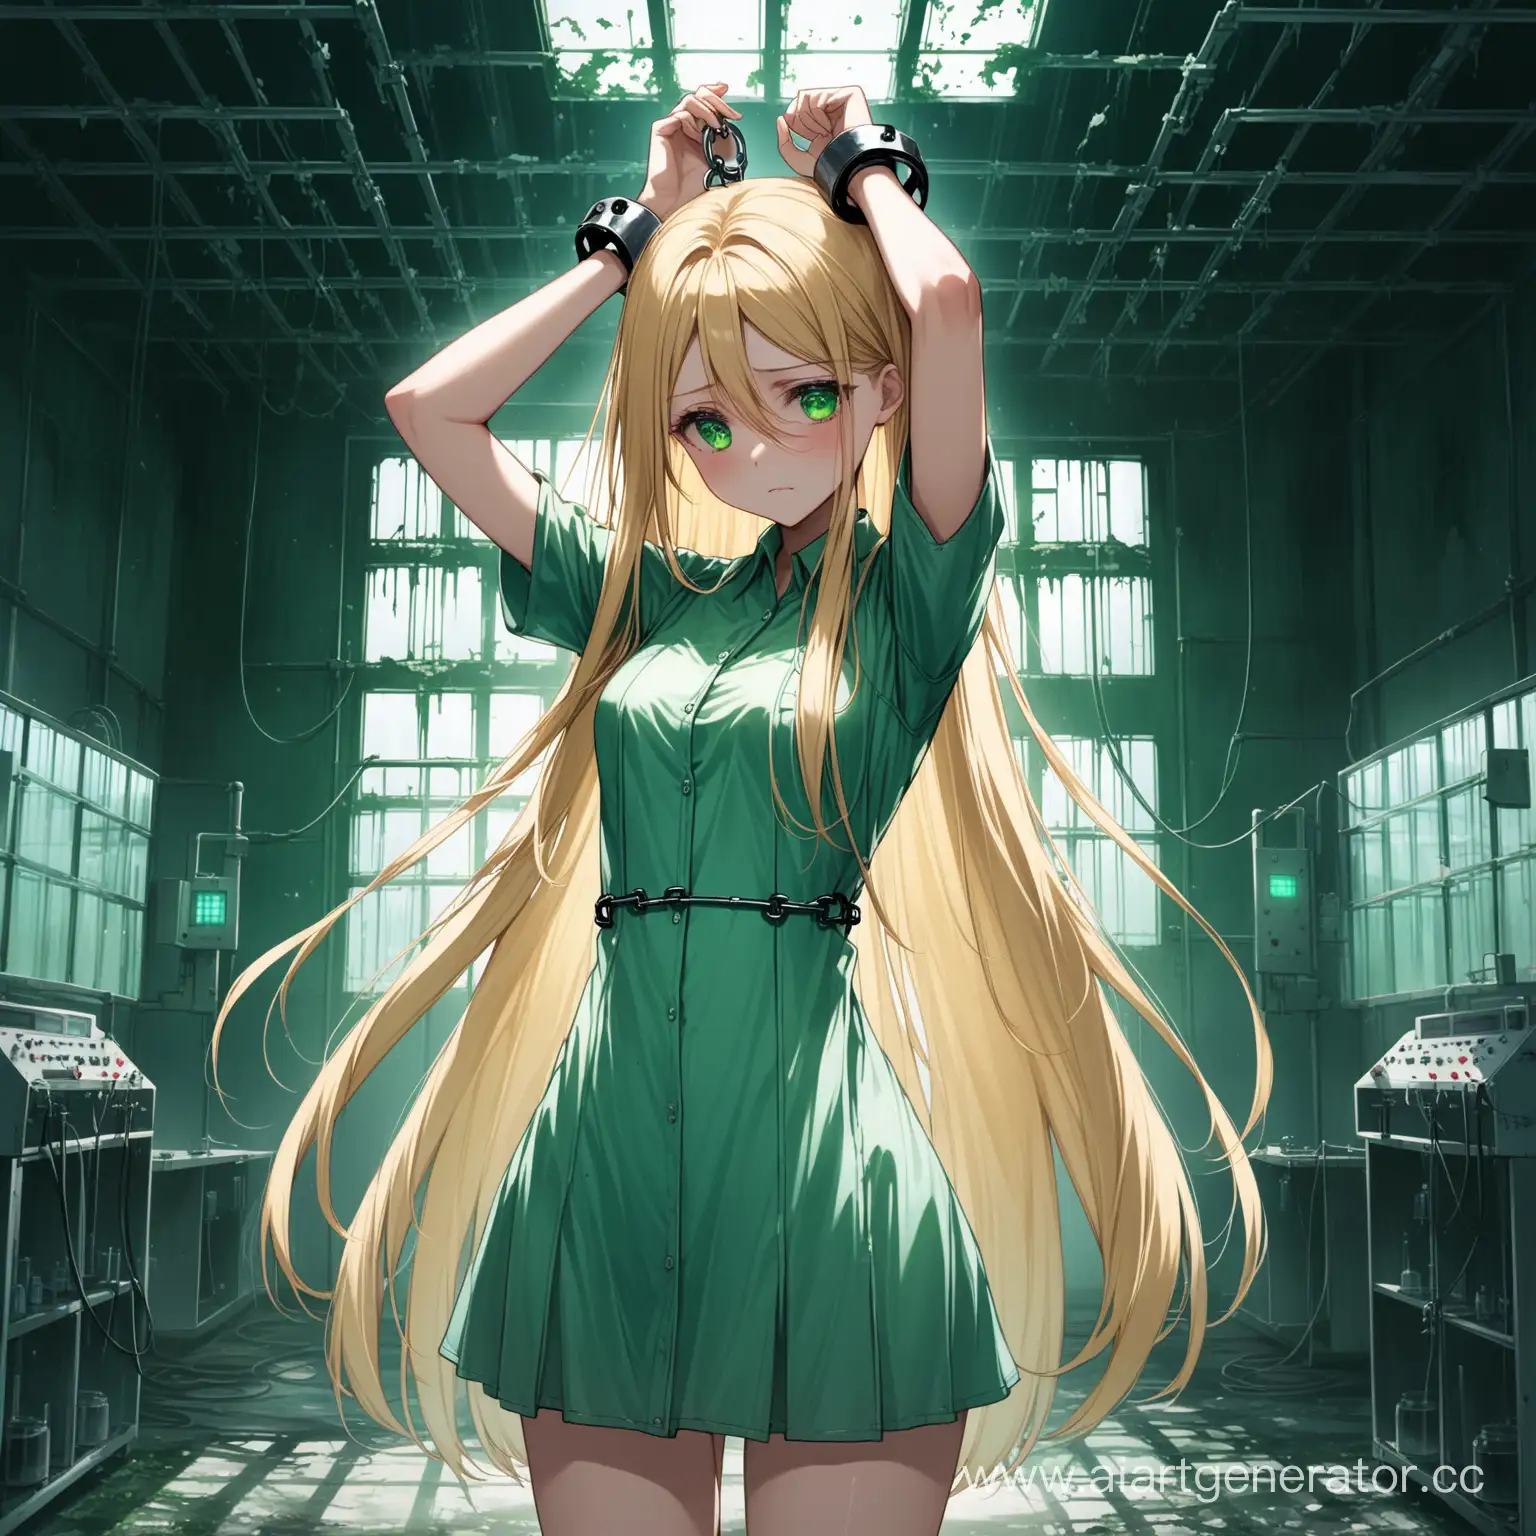 Desperate-Blonde-Girl-in-SemiTransparent-Dress-Handcuffed-in-Abandoned-Laboratory